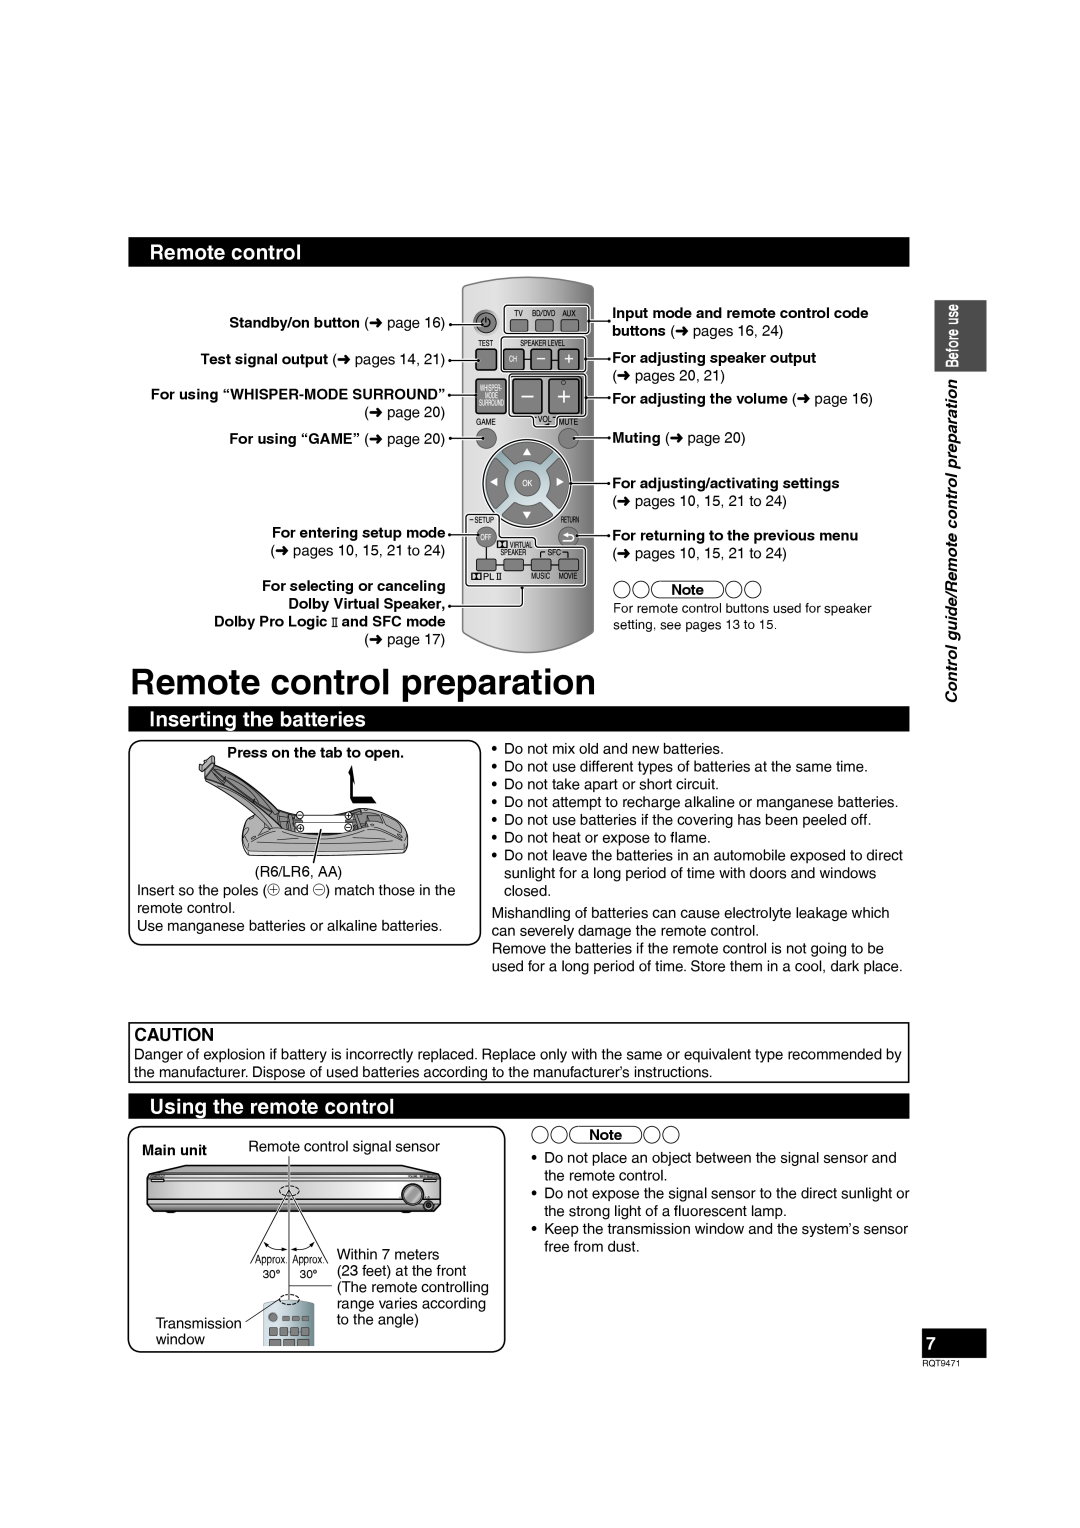 Panasonic SC-ZT1 warranty Remote control preparation, Inserting the batteries, Using the remote control, Control 